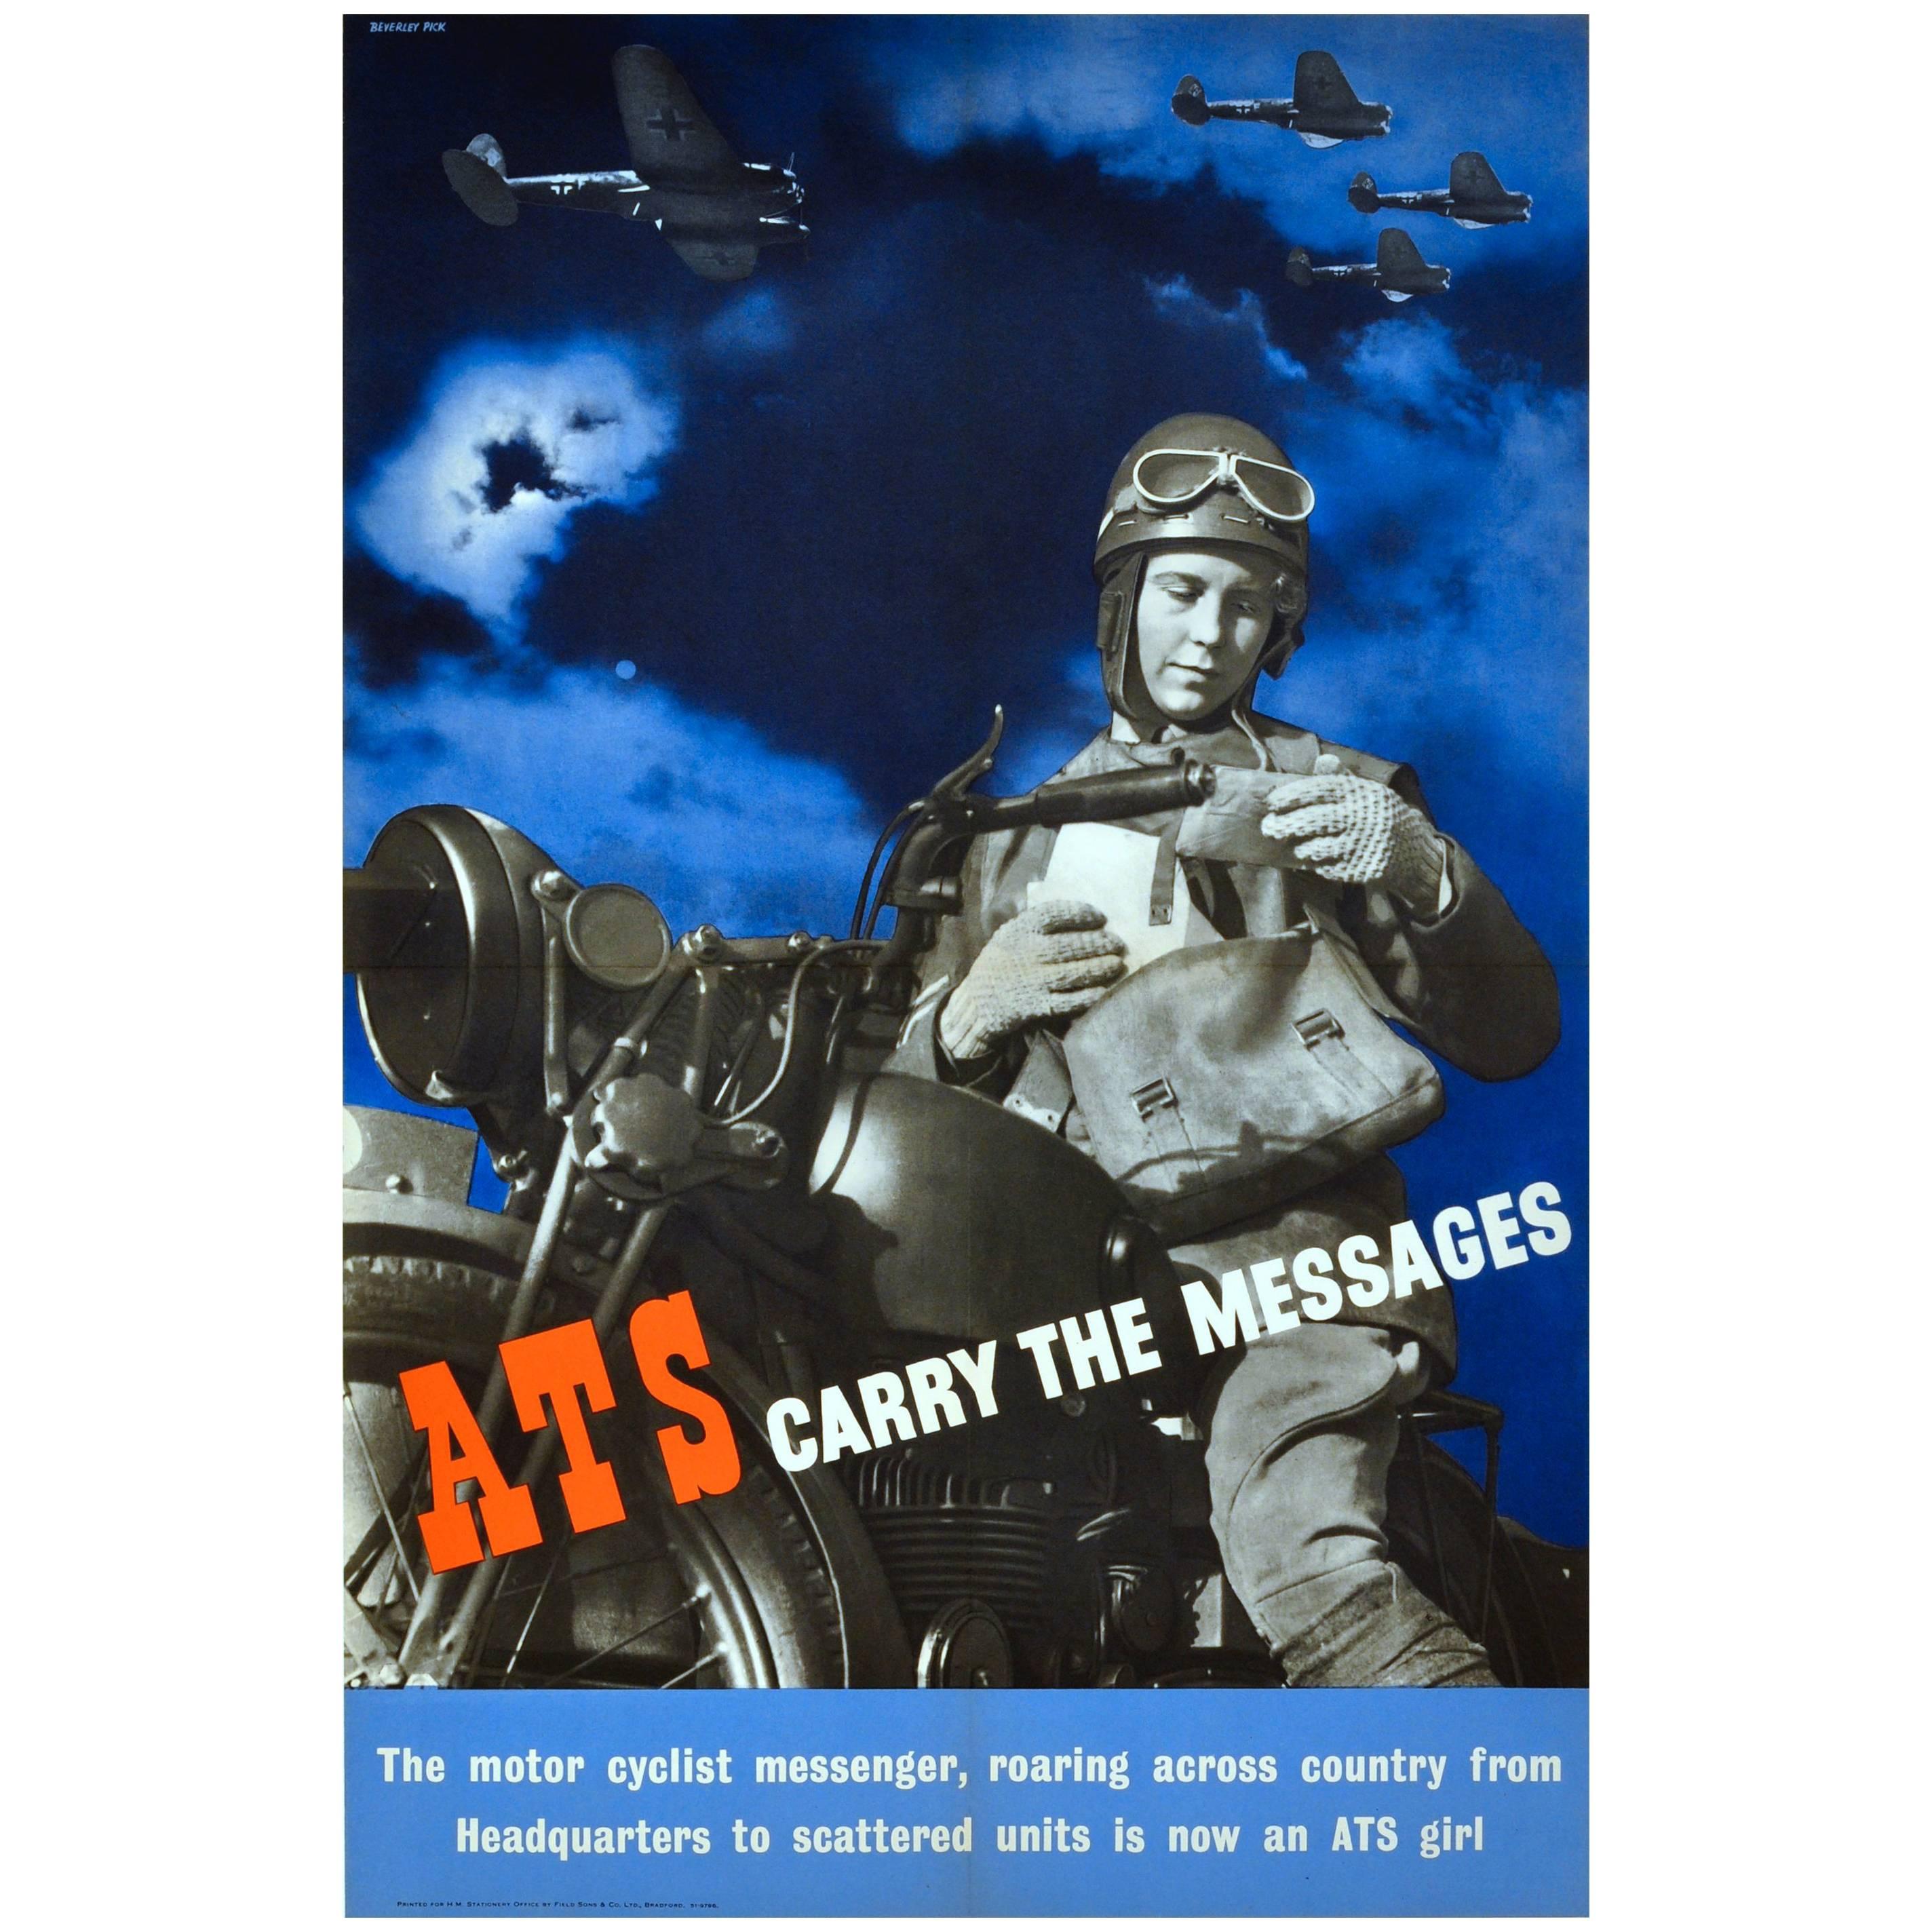 Original Vintage World War II ATS Recruitment Poster, “ATS Carry the Messages”